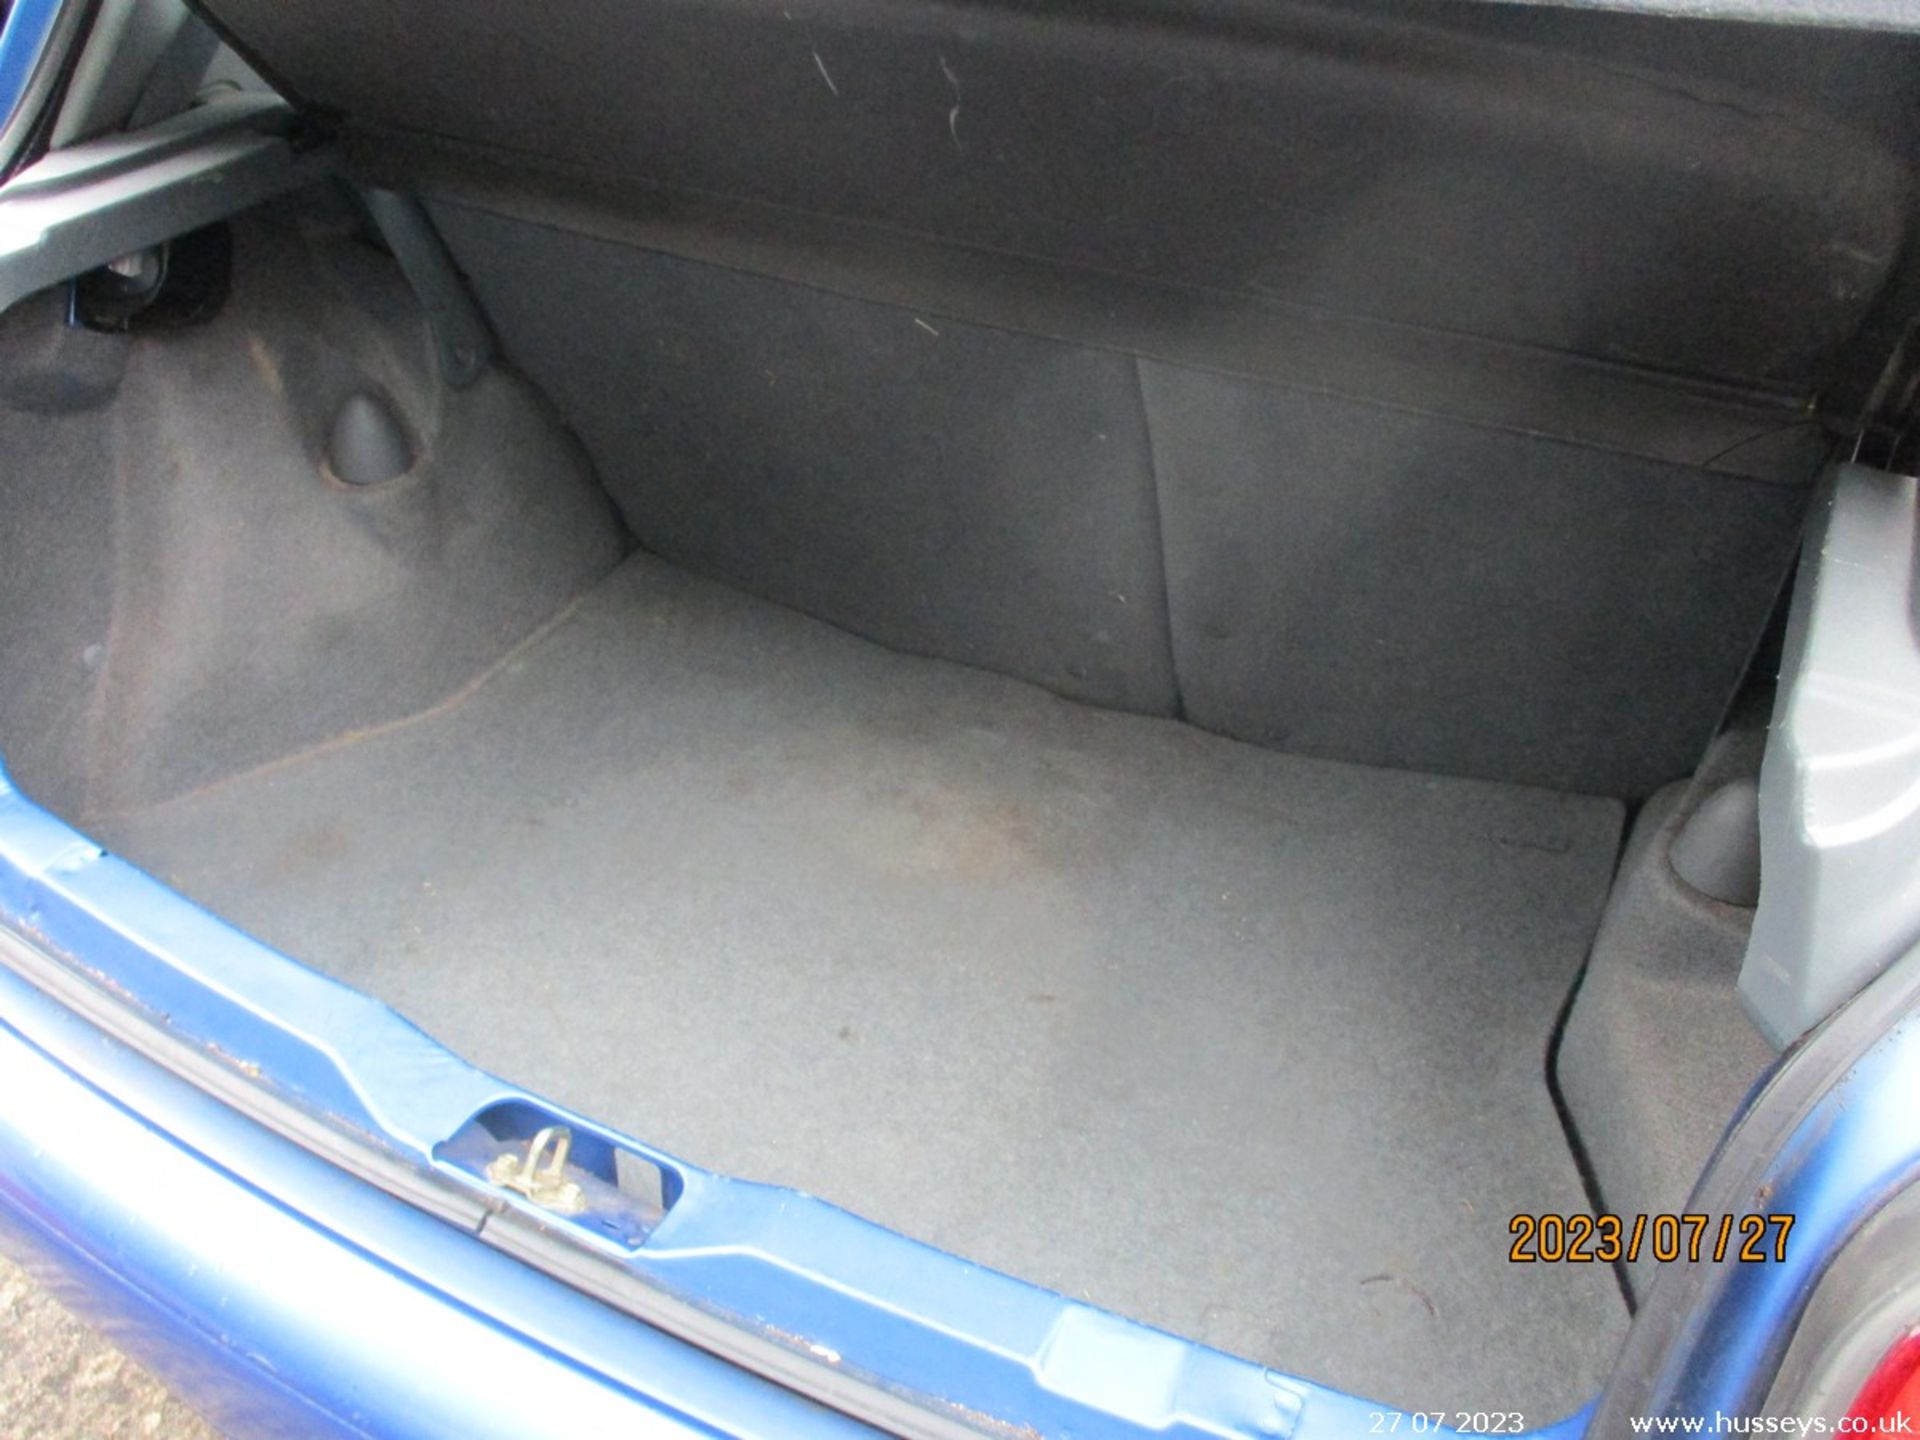 1999 NISSAN MICRA GX AUTO - 1275cc 5dr Hatchback (Blue) - Image 47 of 47